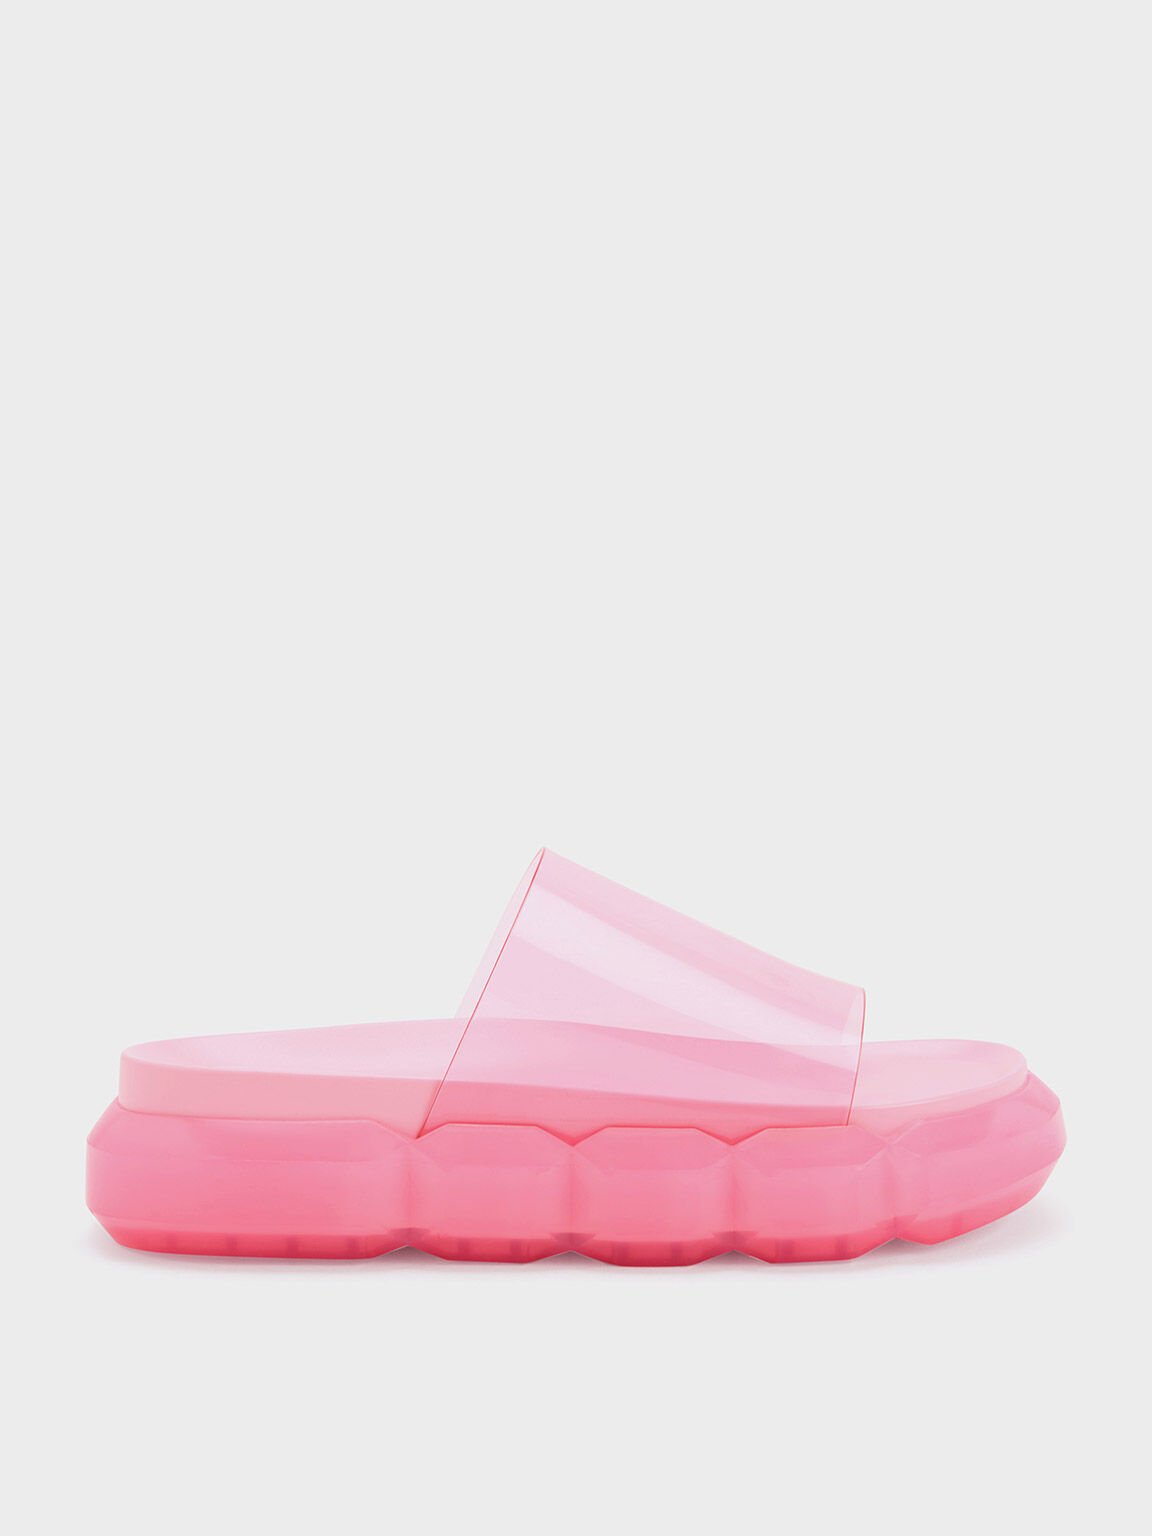 Fia 果凍厚底拖鞋, 淺粉色, hi-res